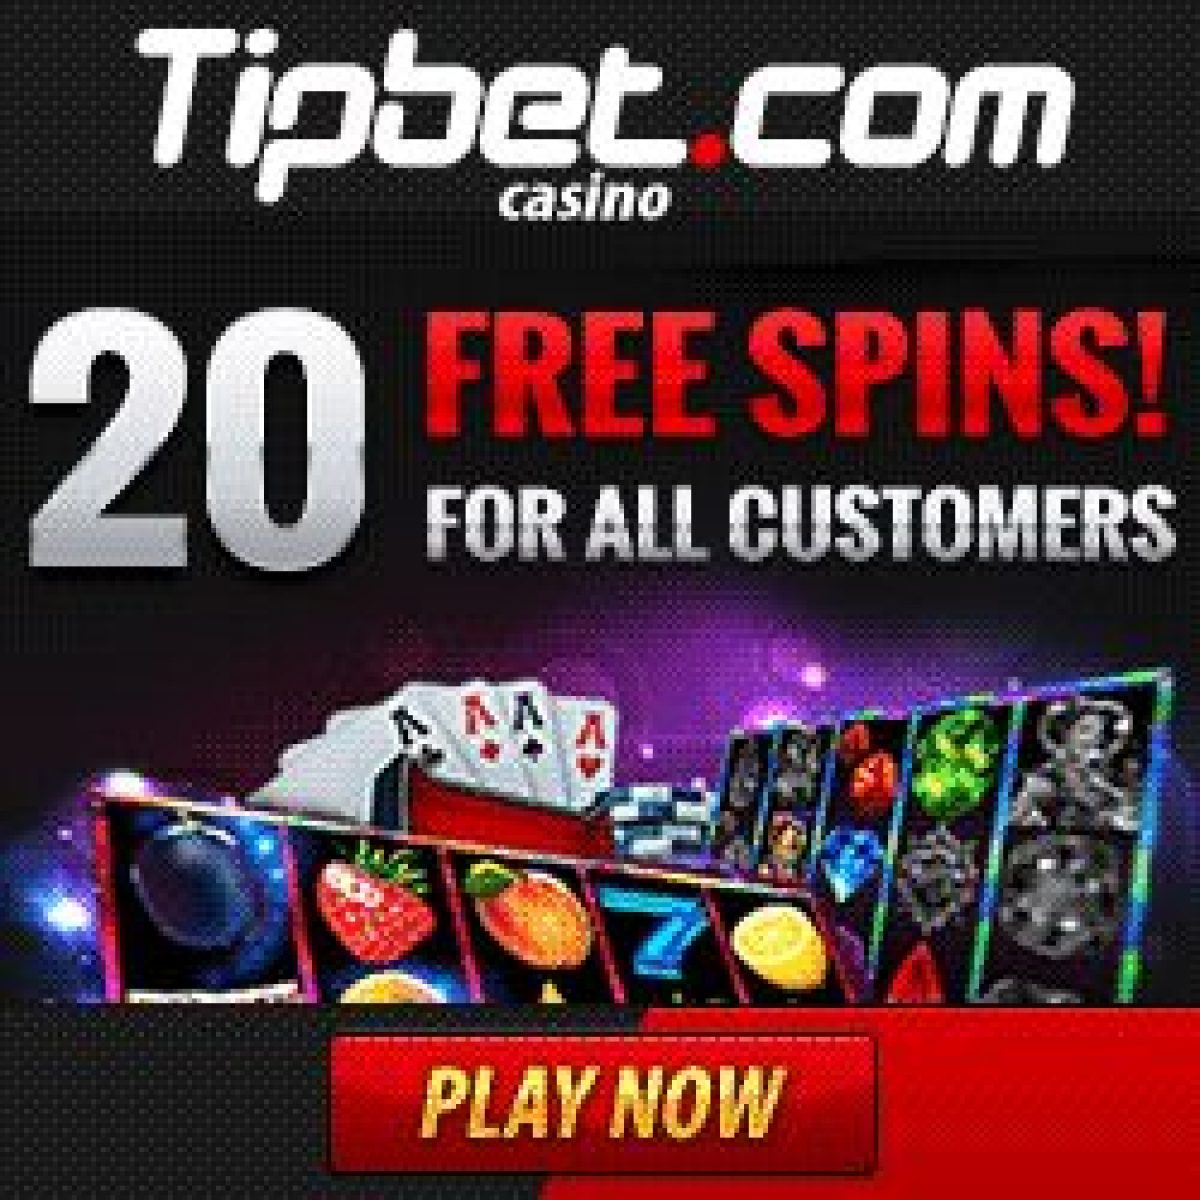 Tipbet Casino